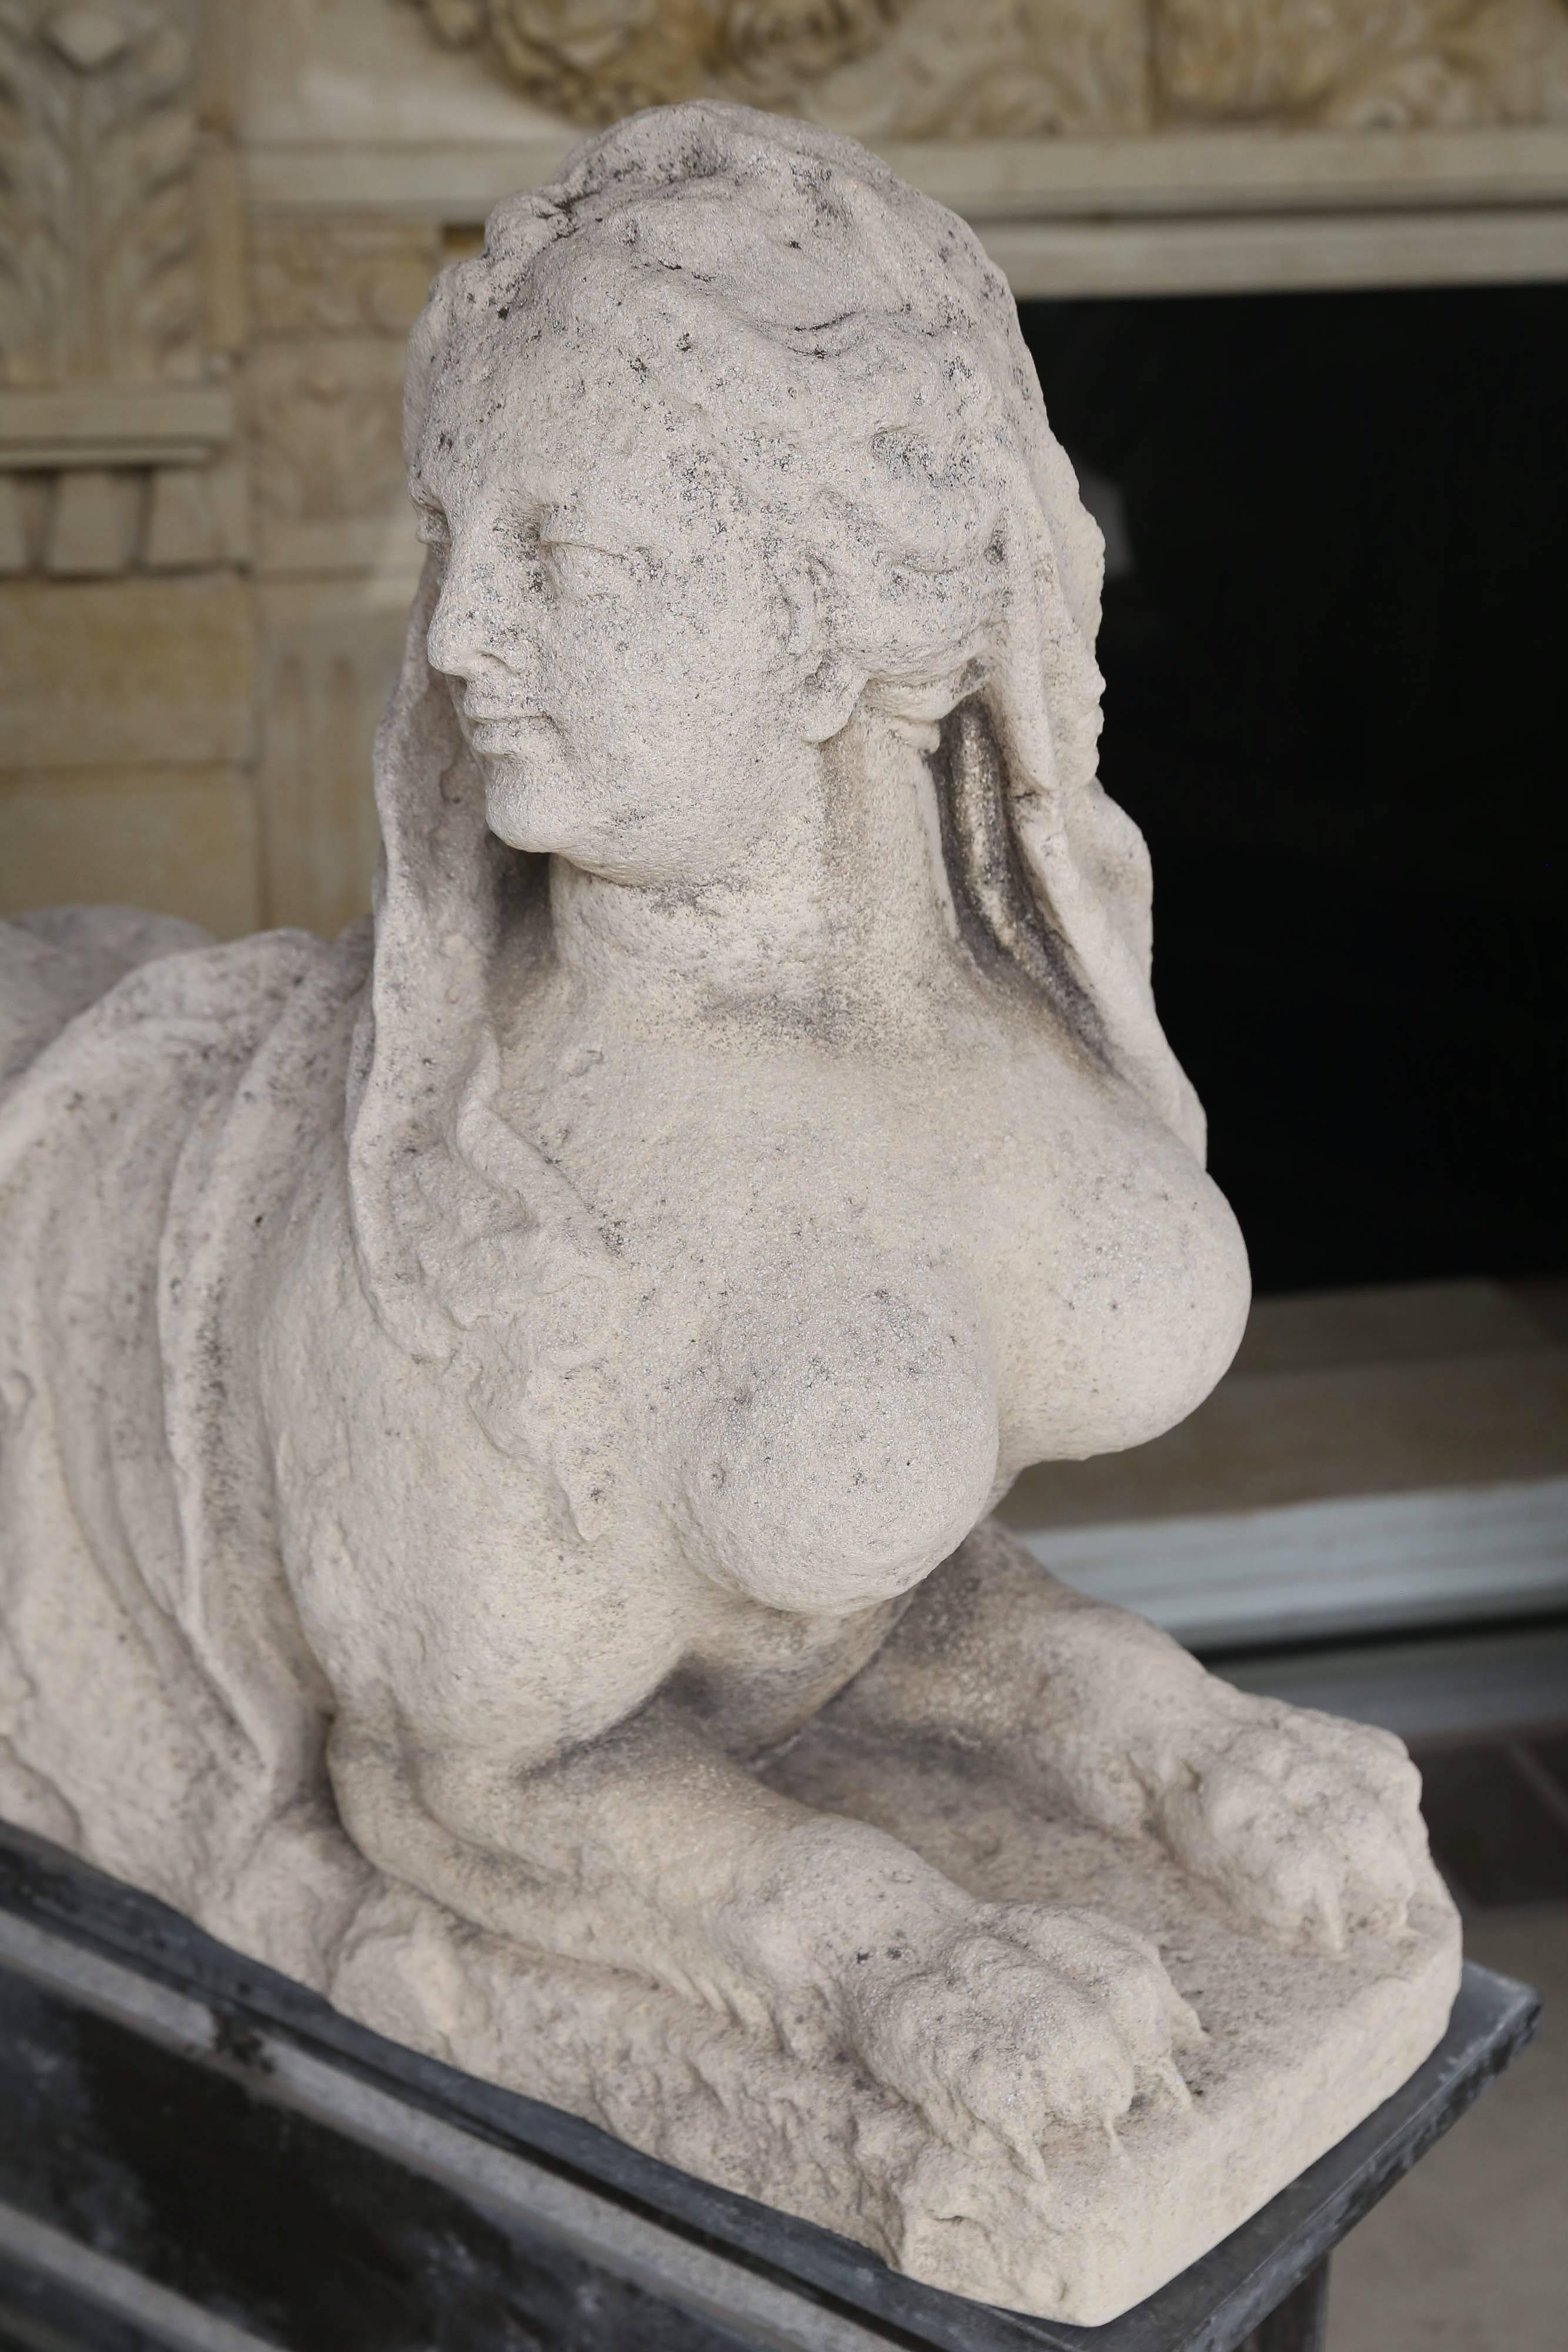 Limestone sphinx pair opposing figures on newer marble bases
The bases measure 12